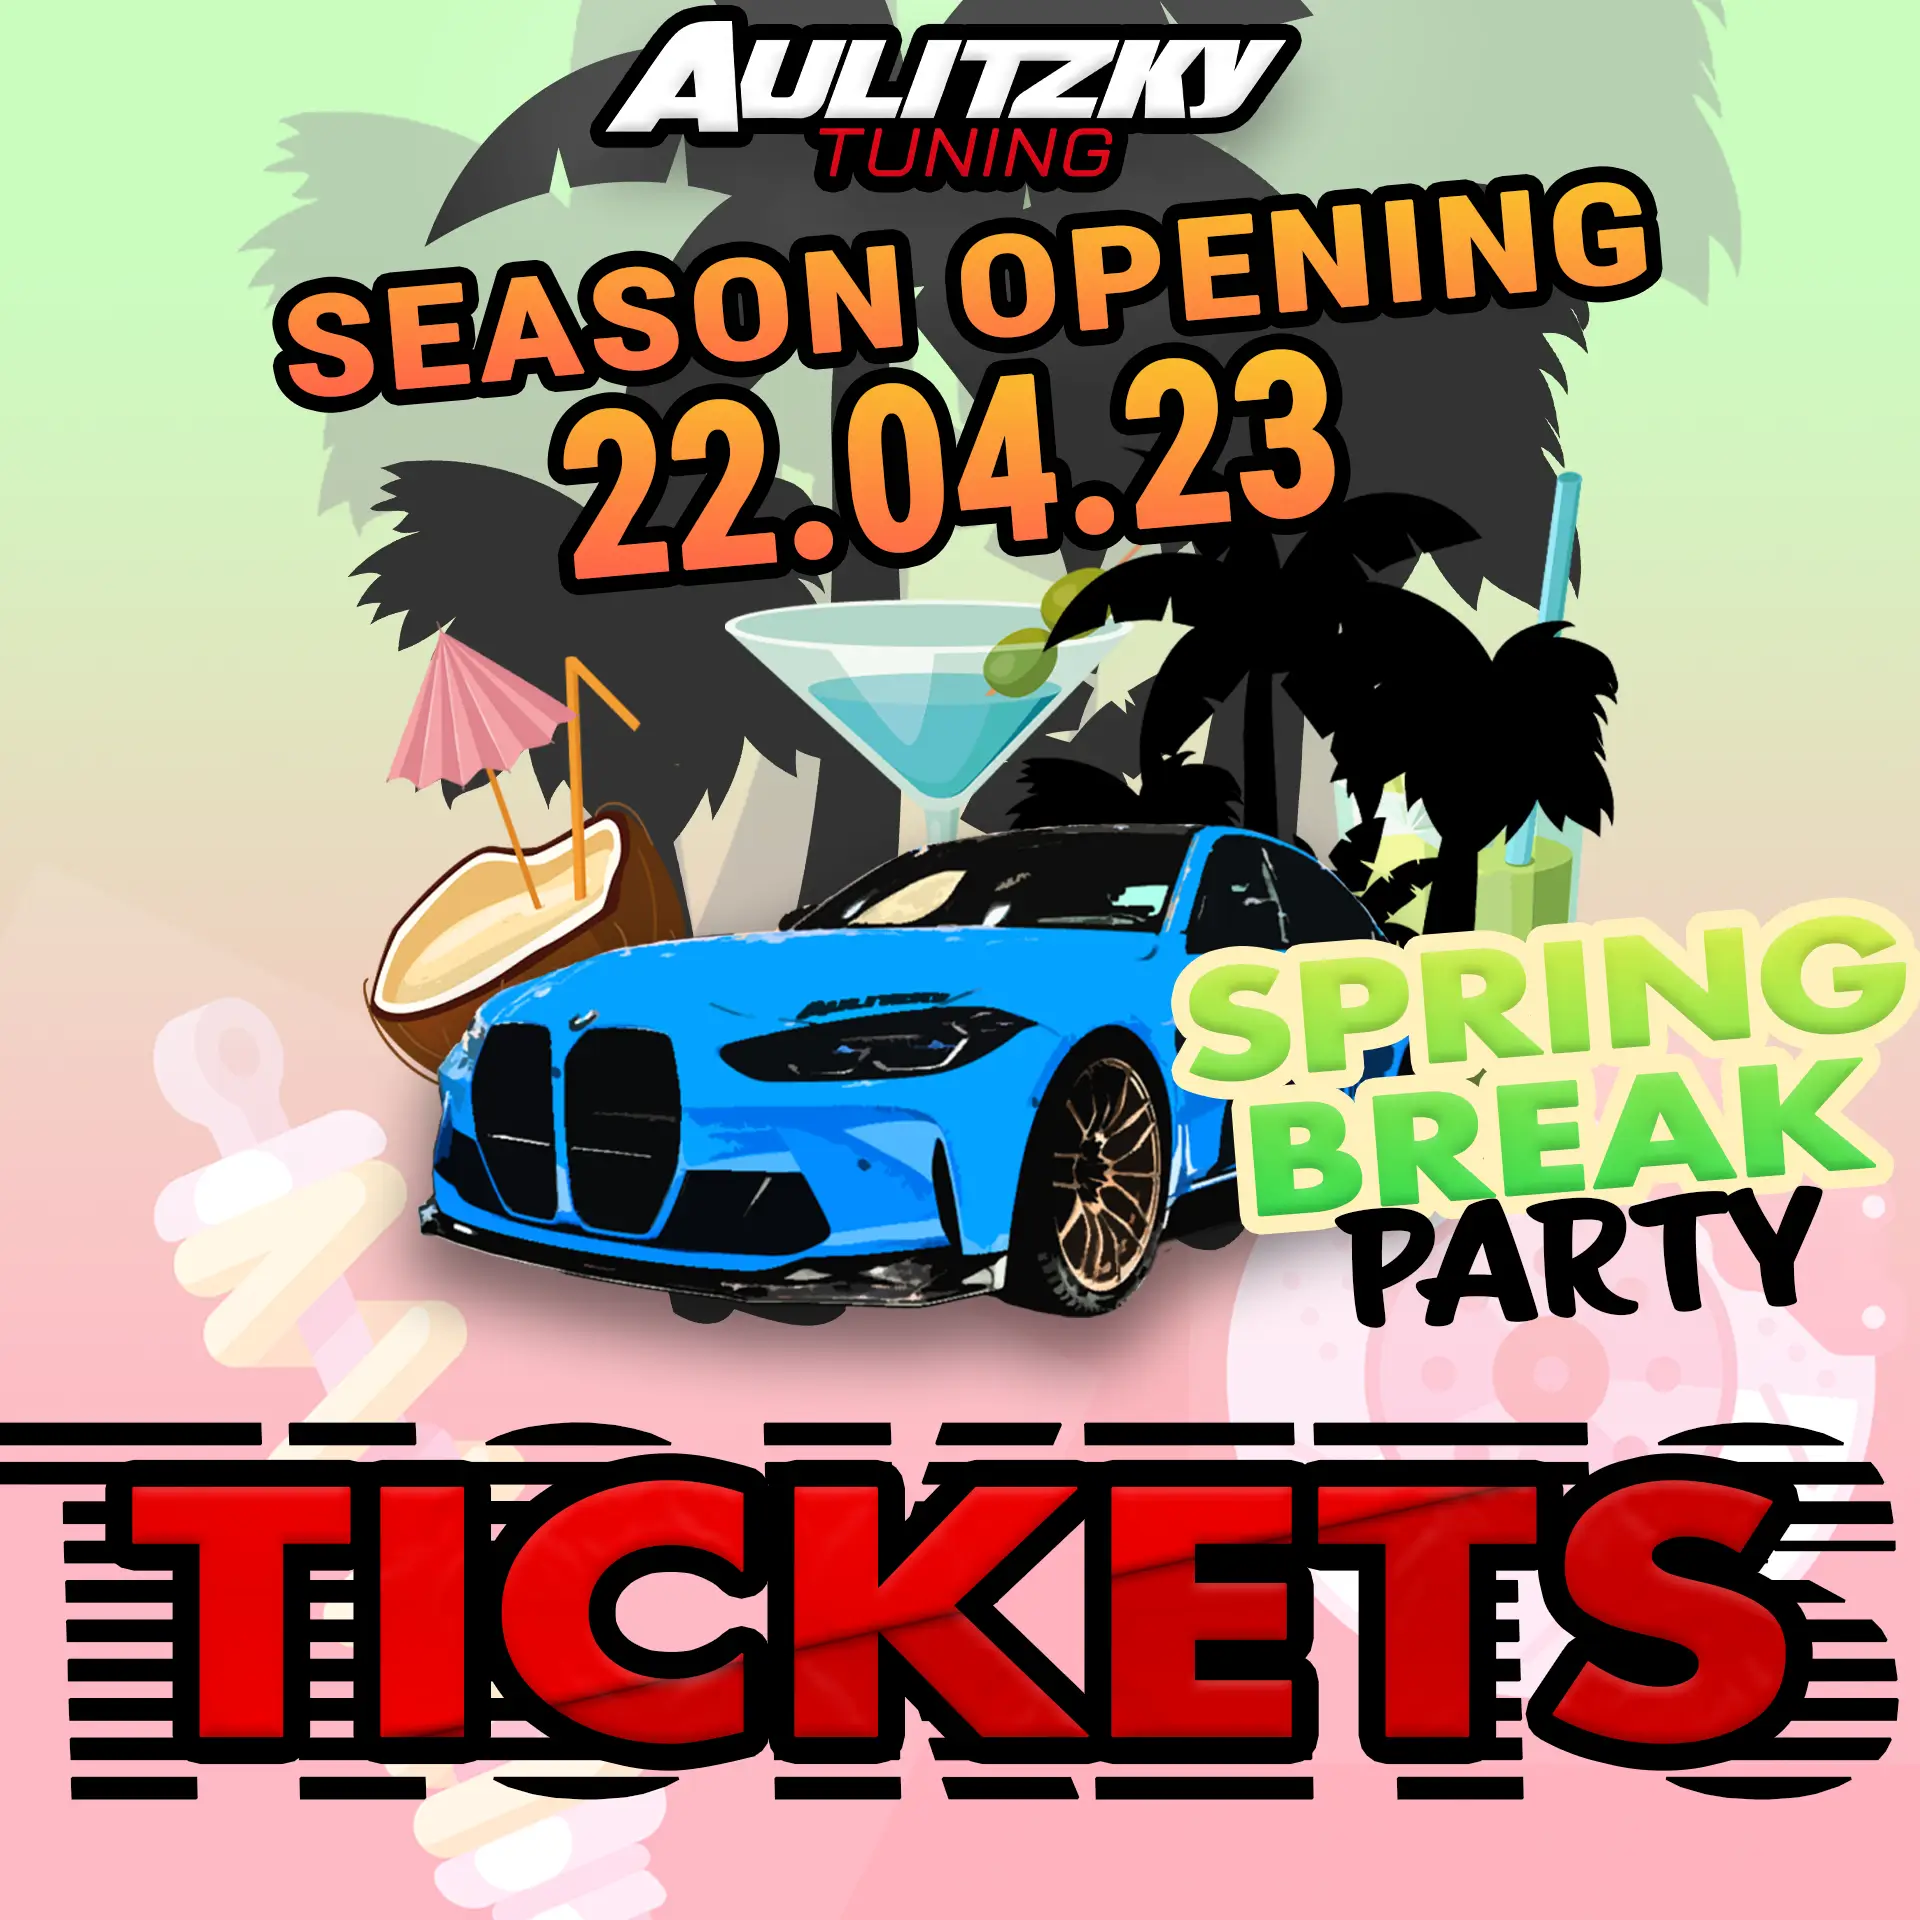 Aulitzky Season Opening 2023 Tickets